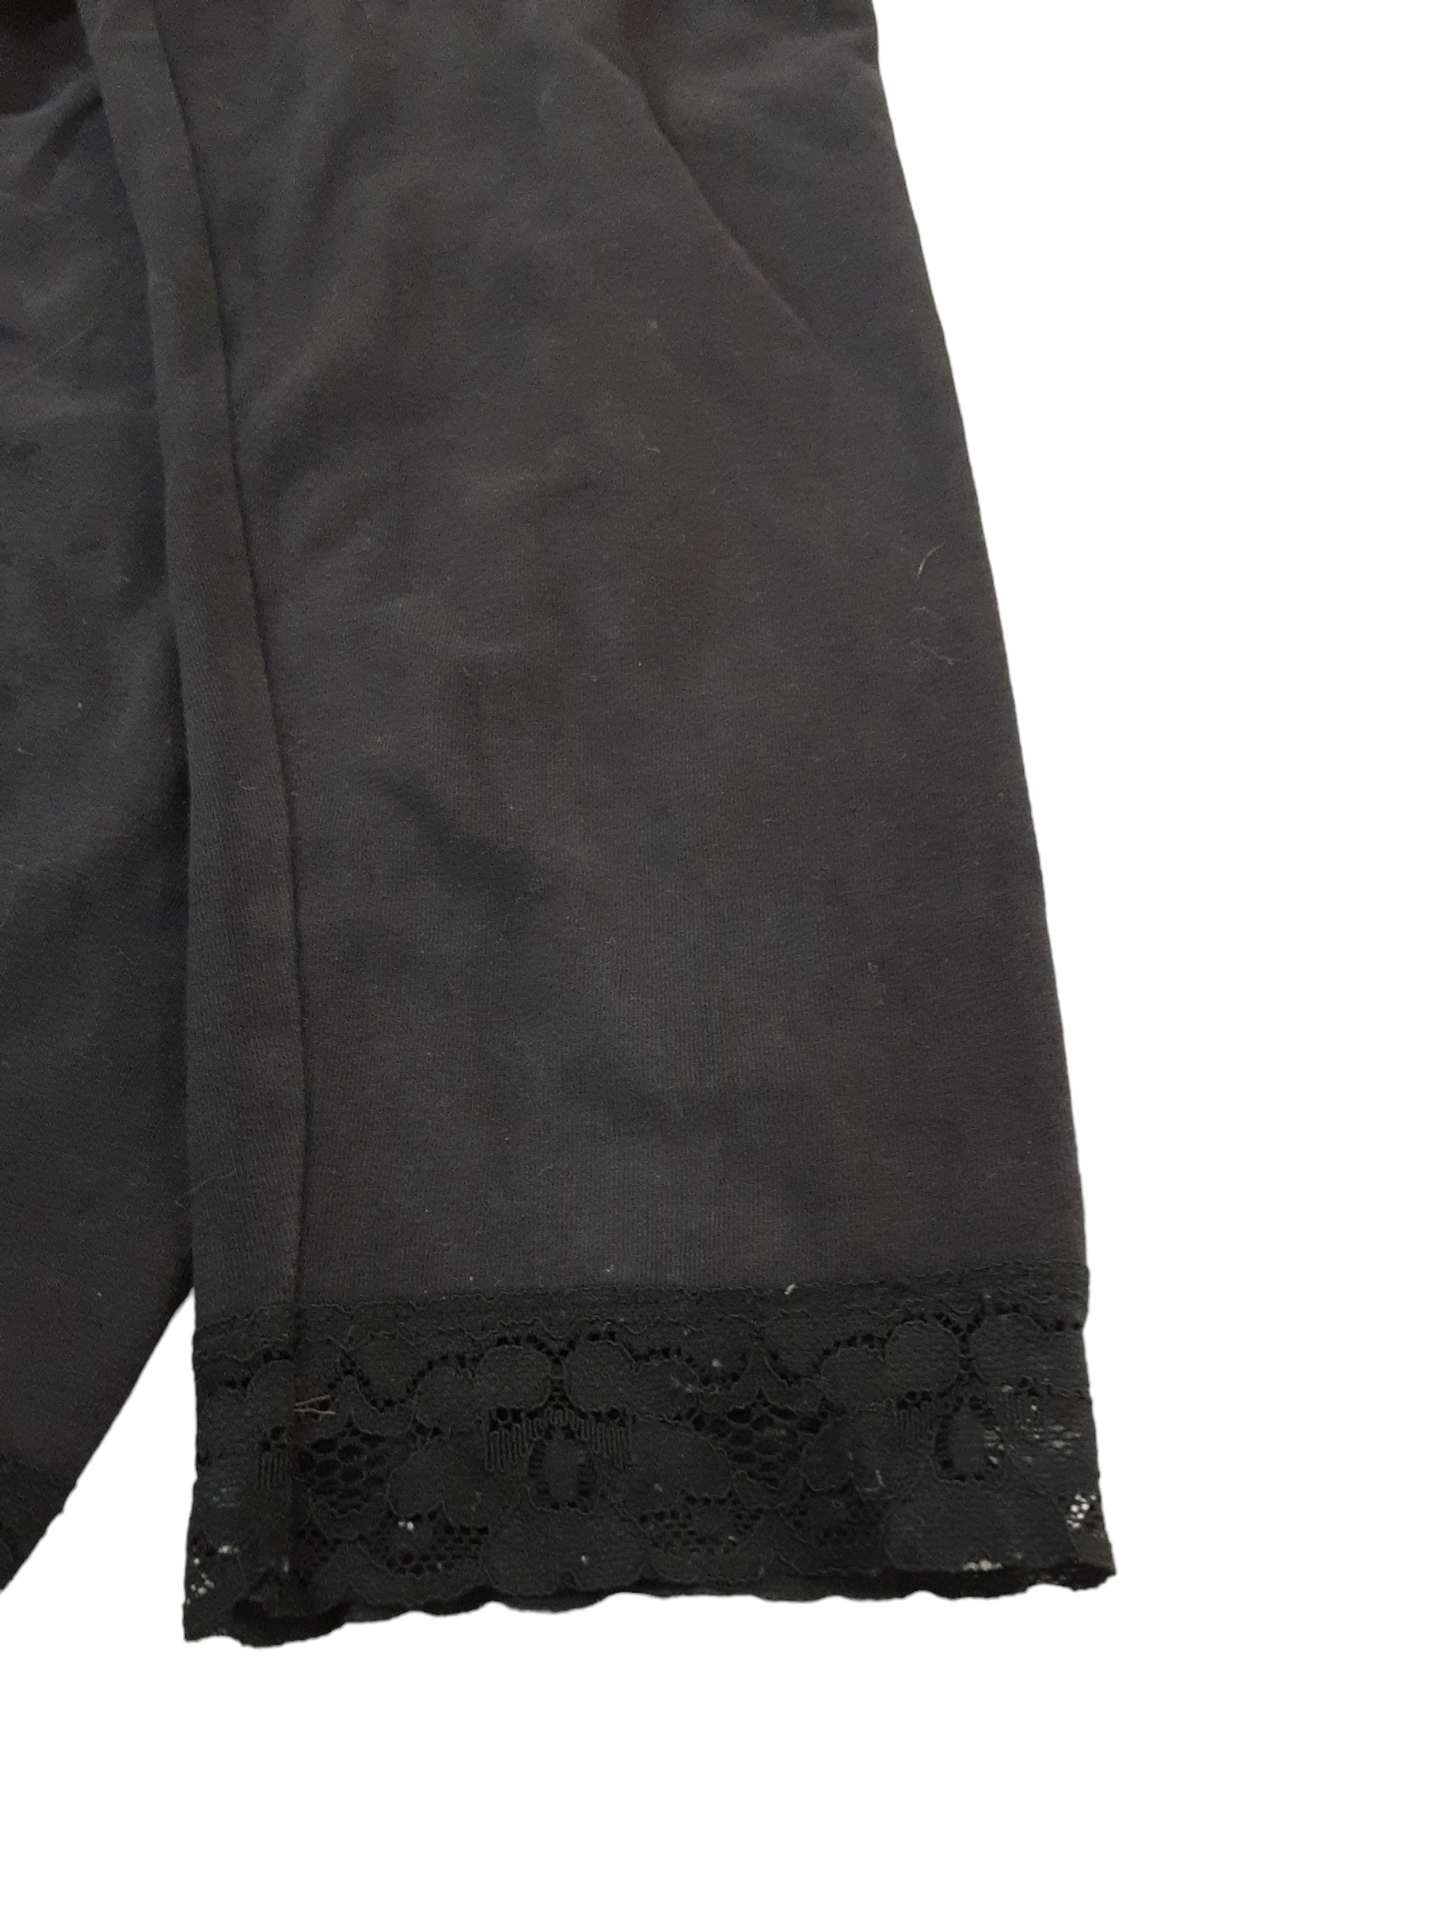 Black Capri  tights with lace cuffs, size 7-8